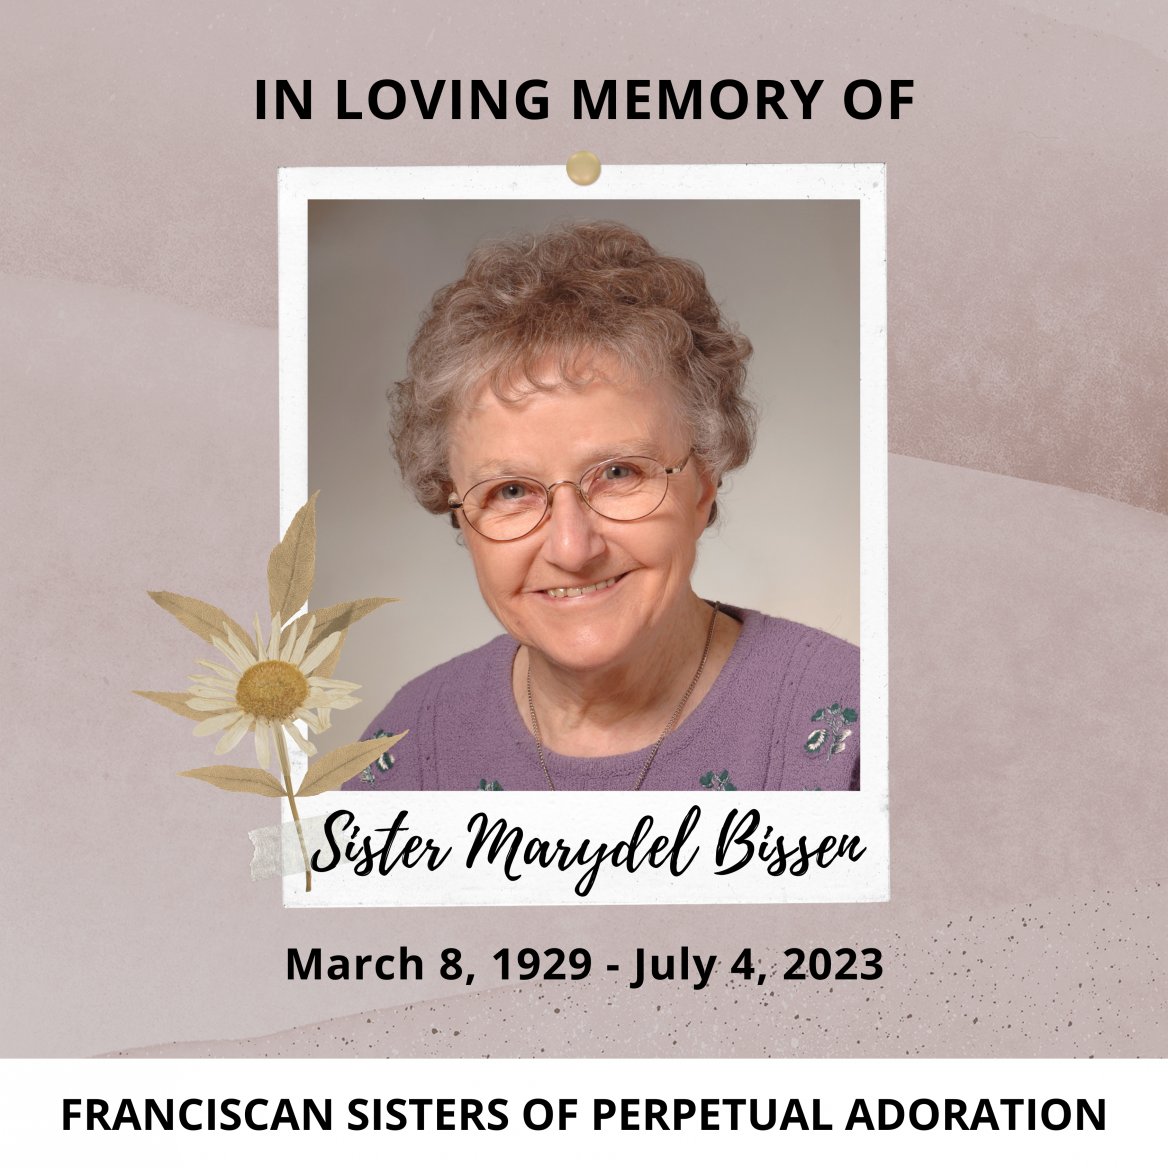 In loving memory of sister marydel bissen